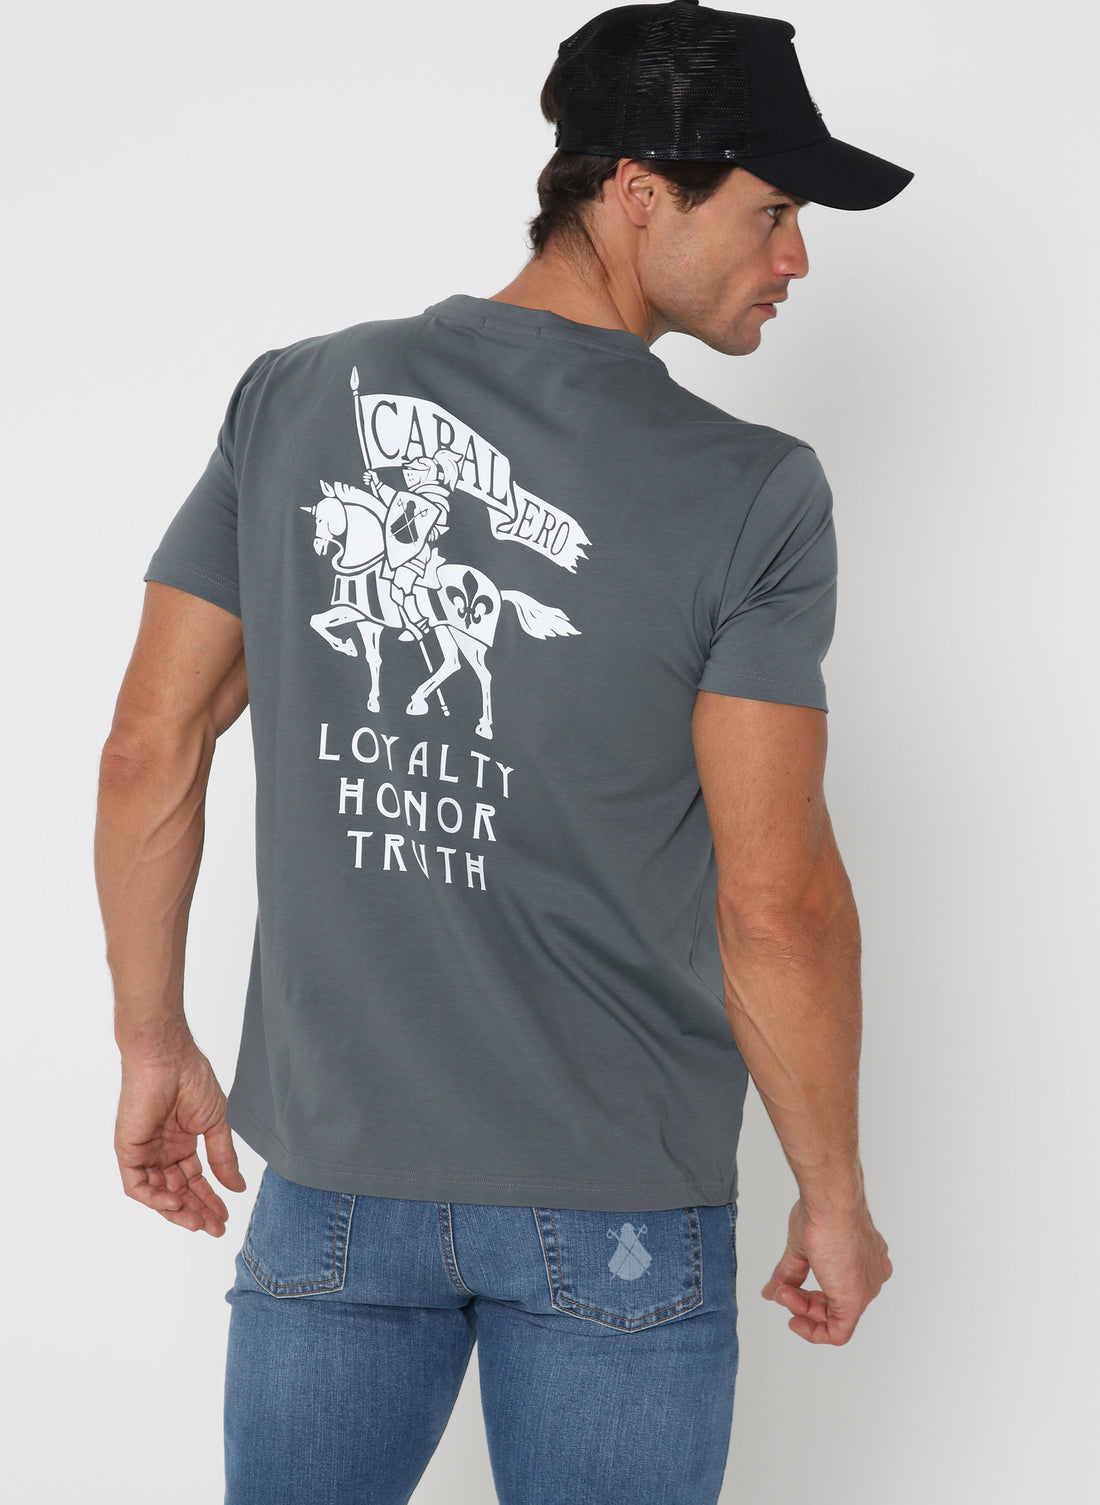 T-shirt Homme Gris x Knight